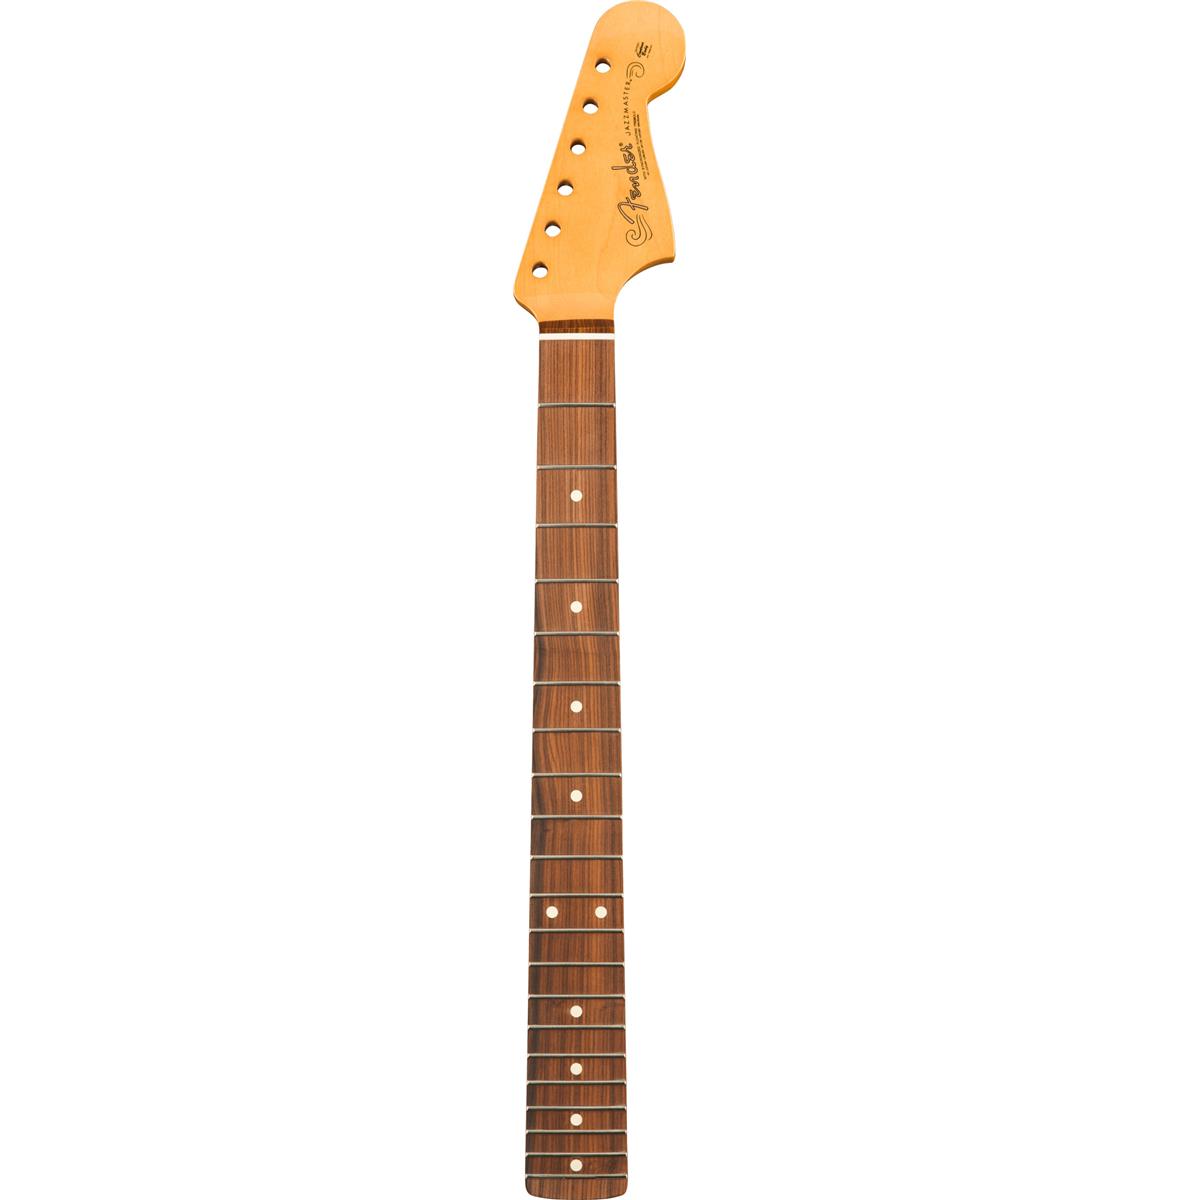 Image of Fender 'C' Shape Neck for Classic Player Jazzmaster Guitar